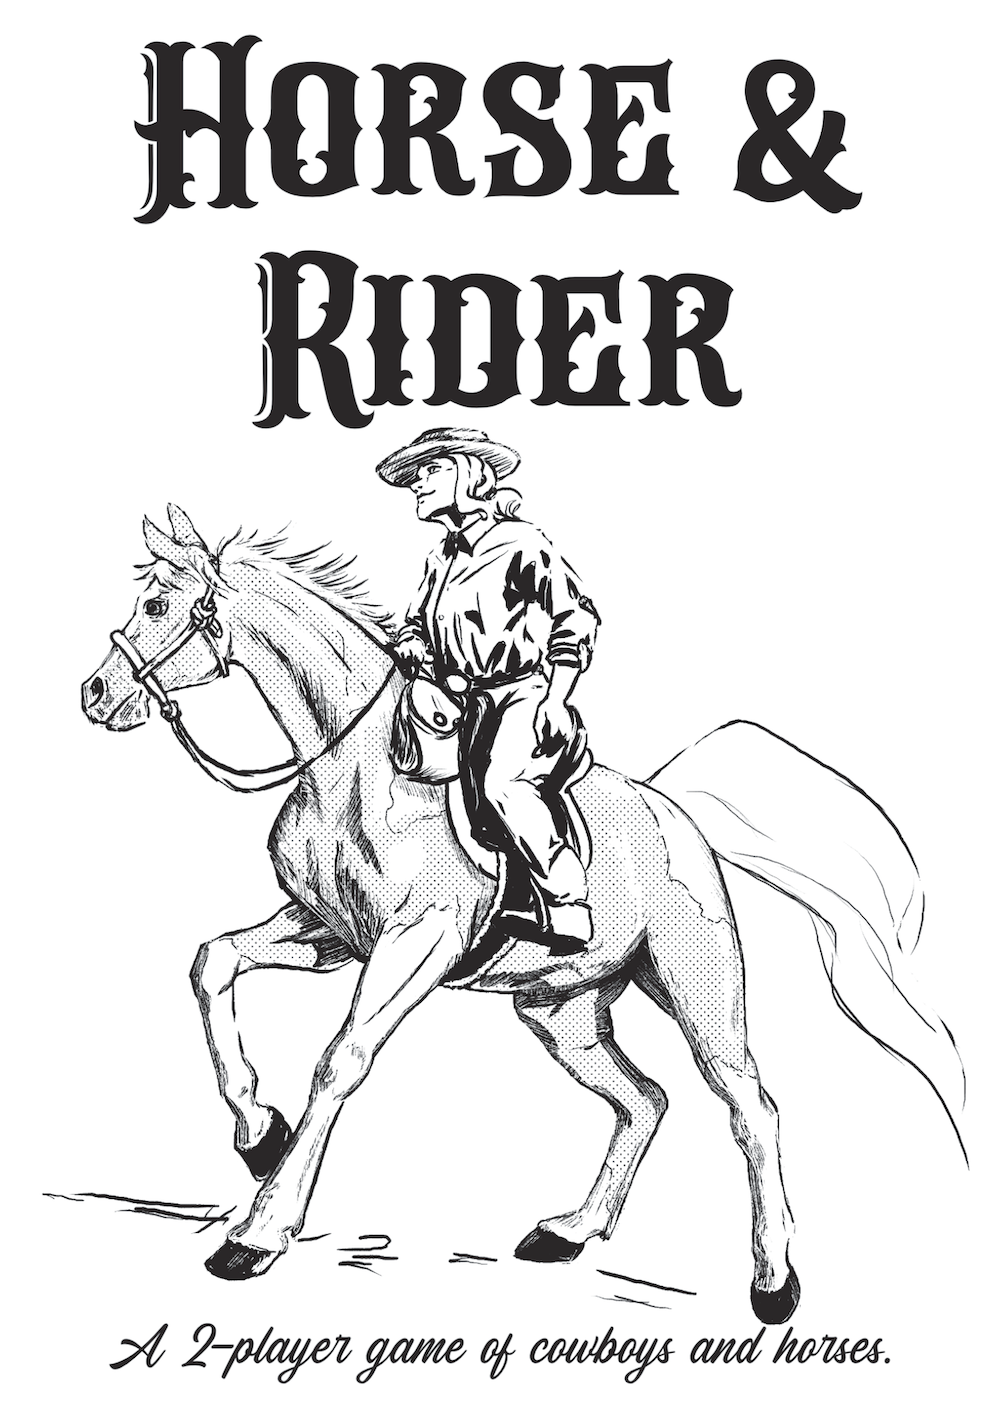 HORSE & RIDER